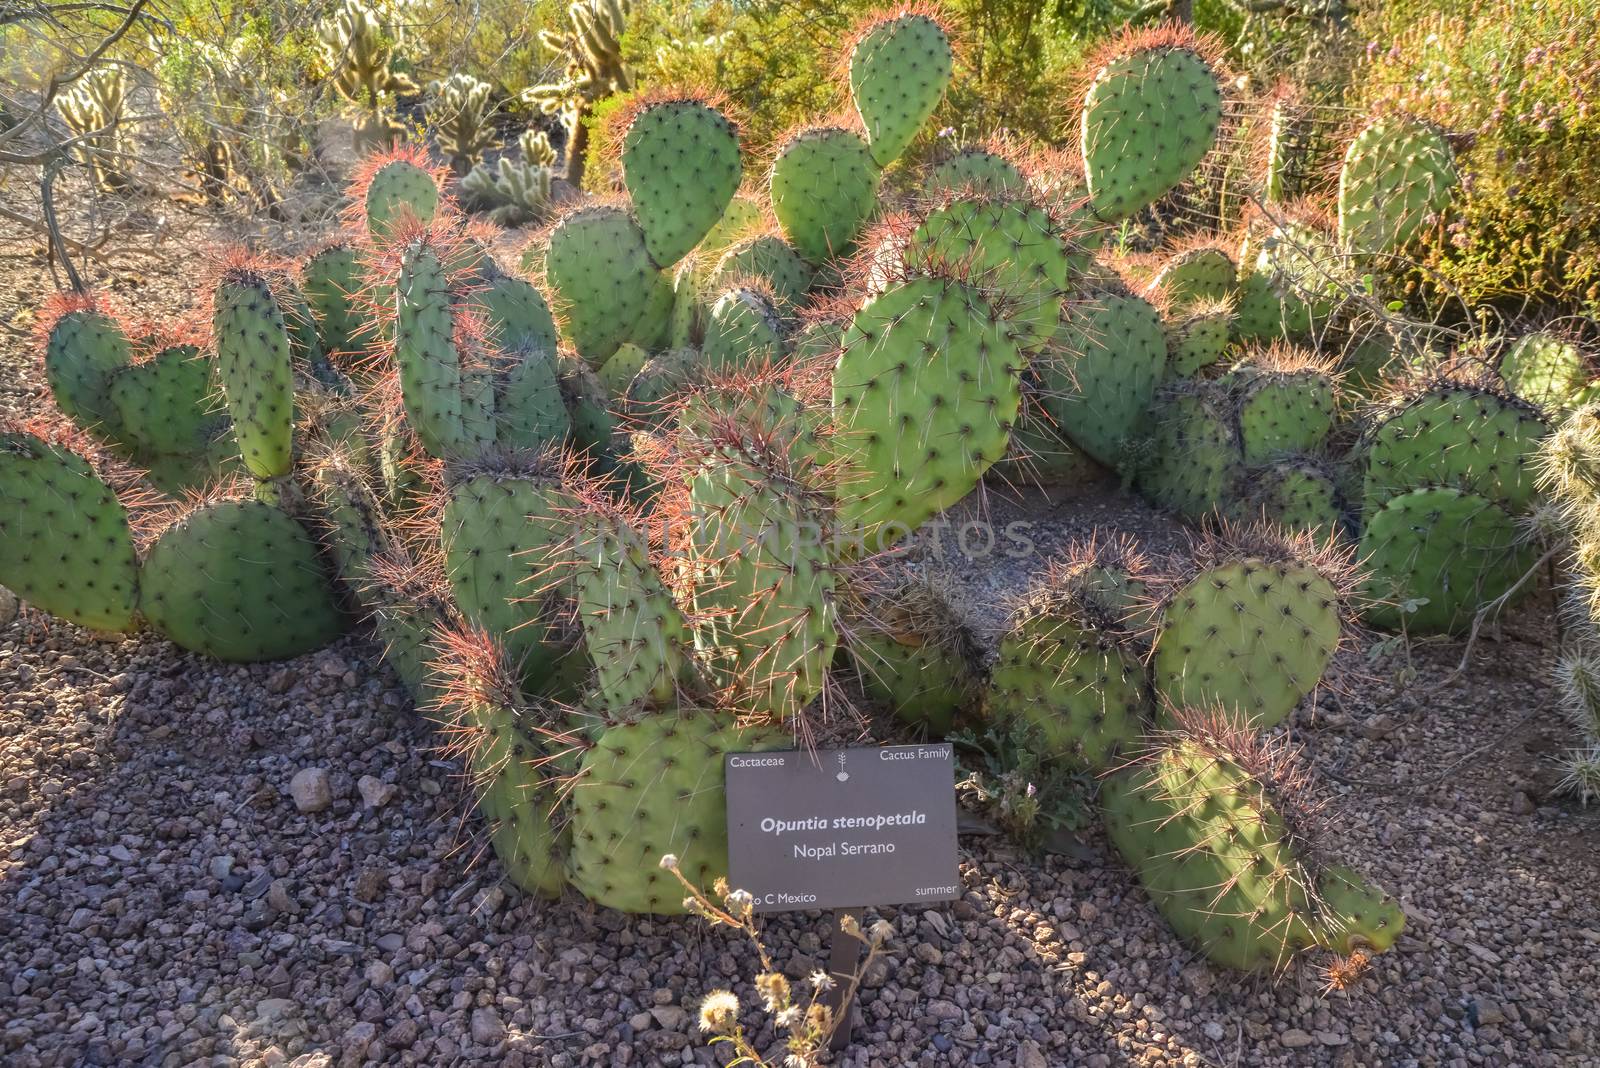 USA, PHENIX, ARIZONA- NOVEMBER 17, 2019: Cactus nameplate, nopal Serrano (Opuntia stenopetala). A succulent plants of Opuntia cacti in the Phoenix Botanical Garden, Arizona, USA